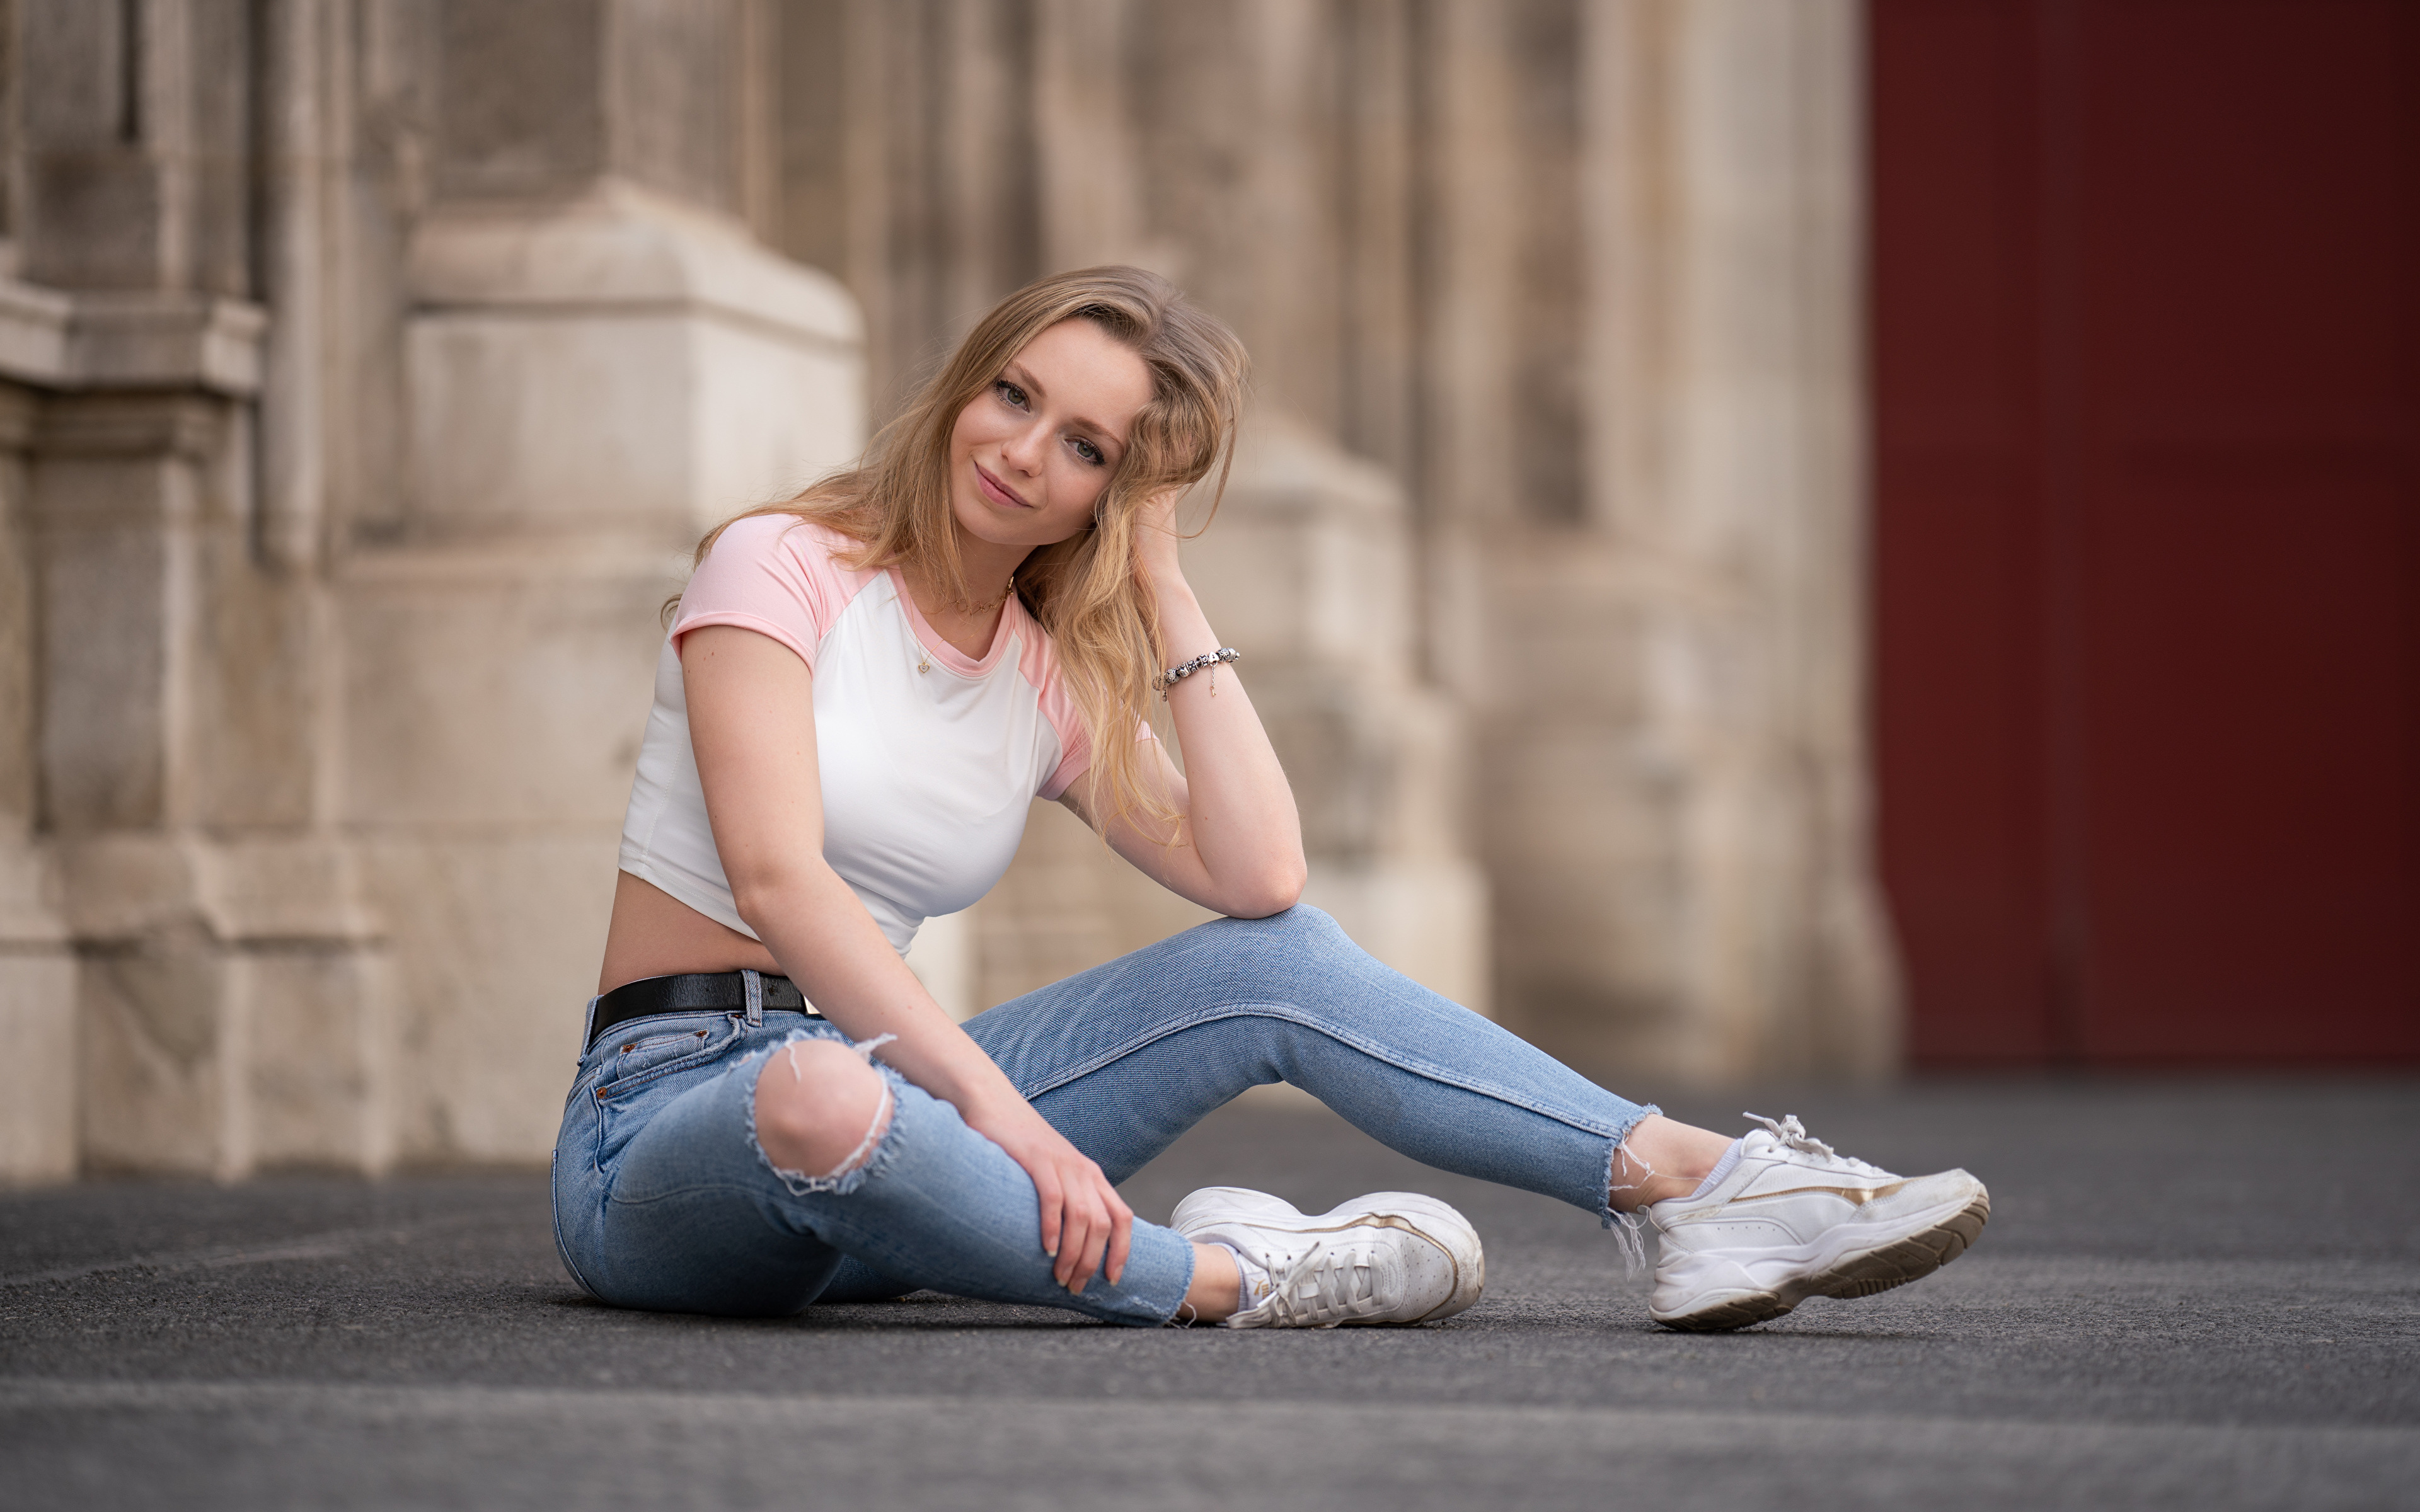 Girl Model Pose Jeans Image & Photo (Free Trial) | Bigstock